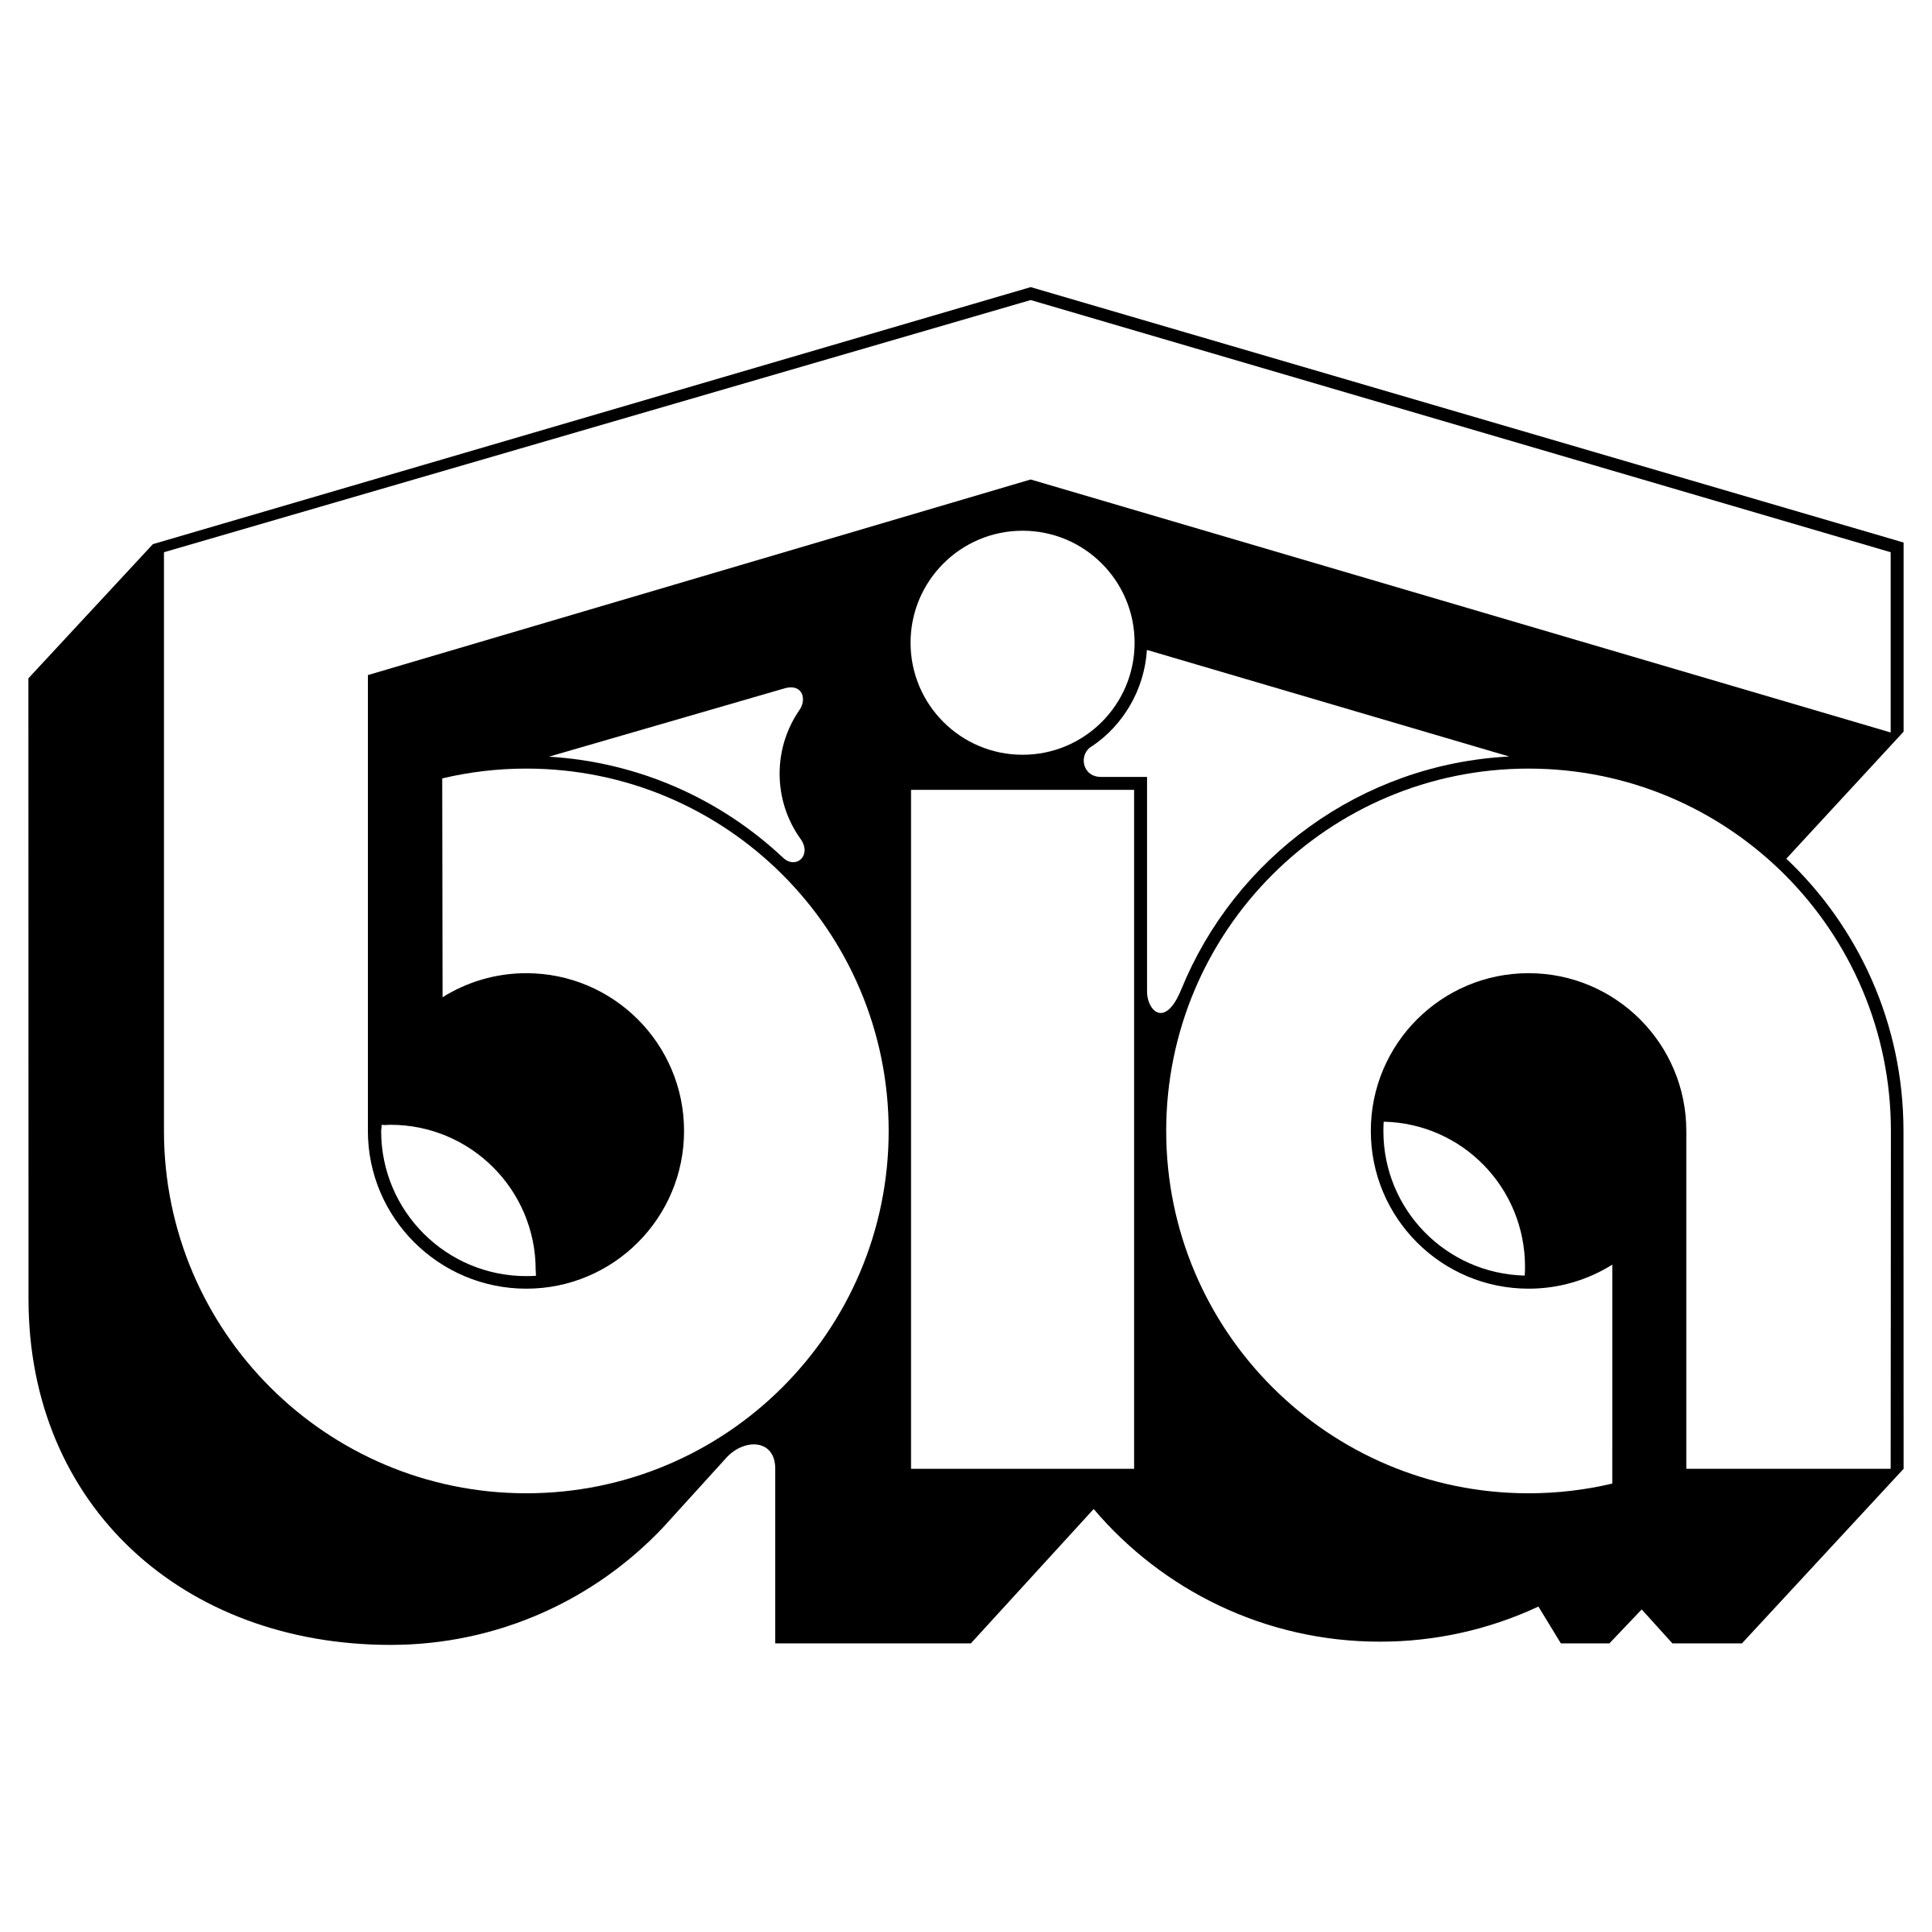 Bia Logo - Bia Logo PNG Transparent & SVG Vector - Freebie Supply